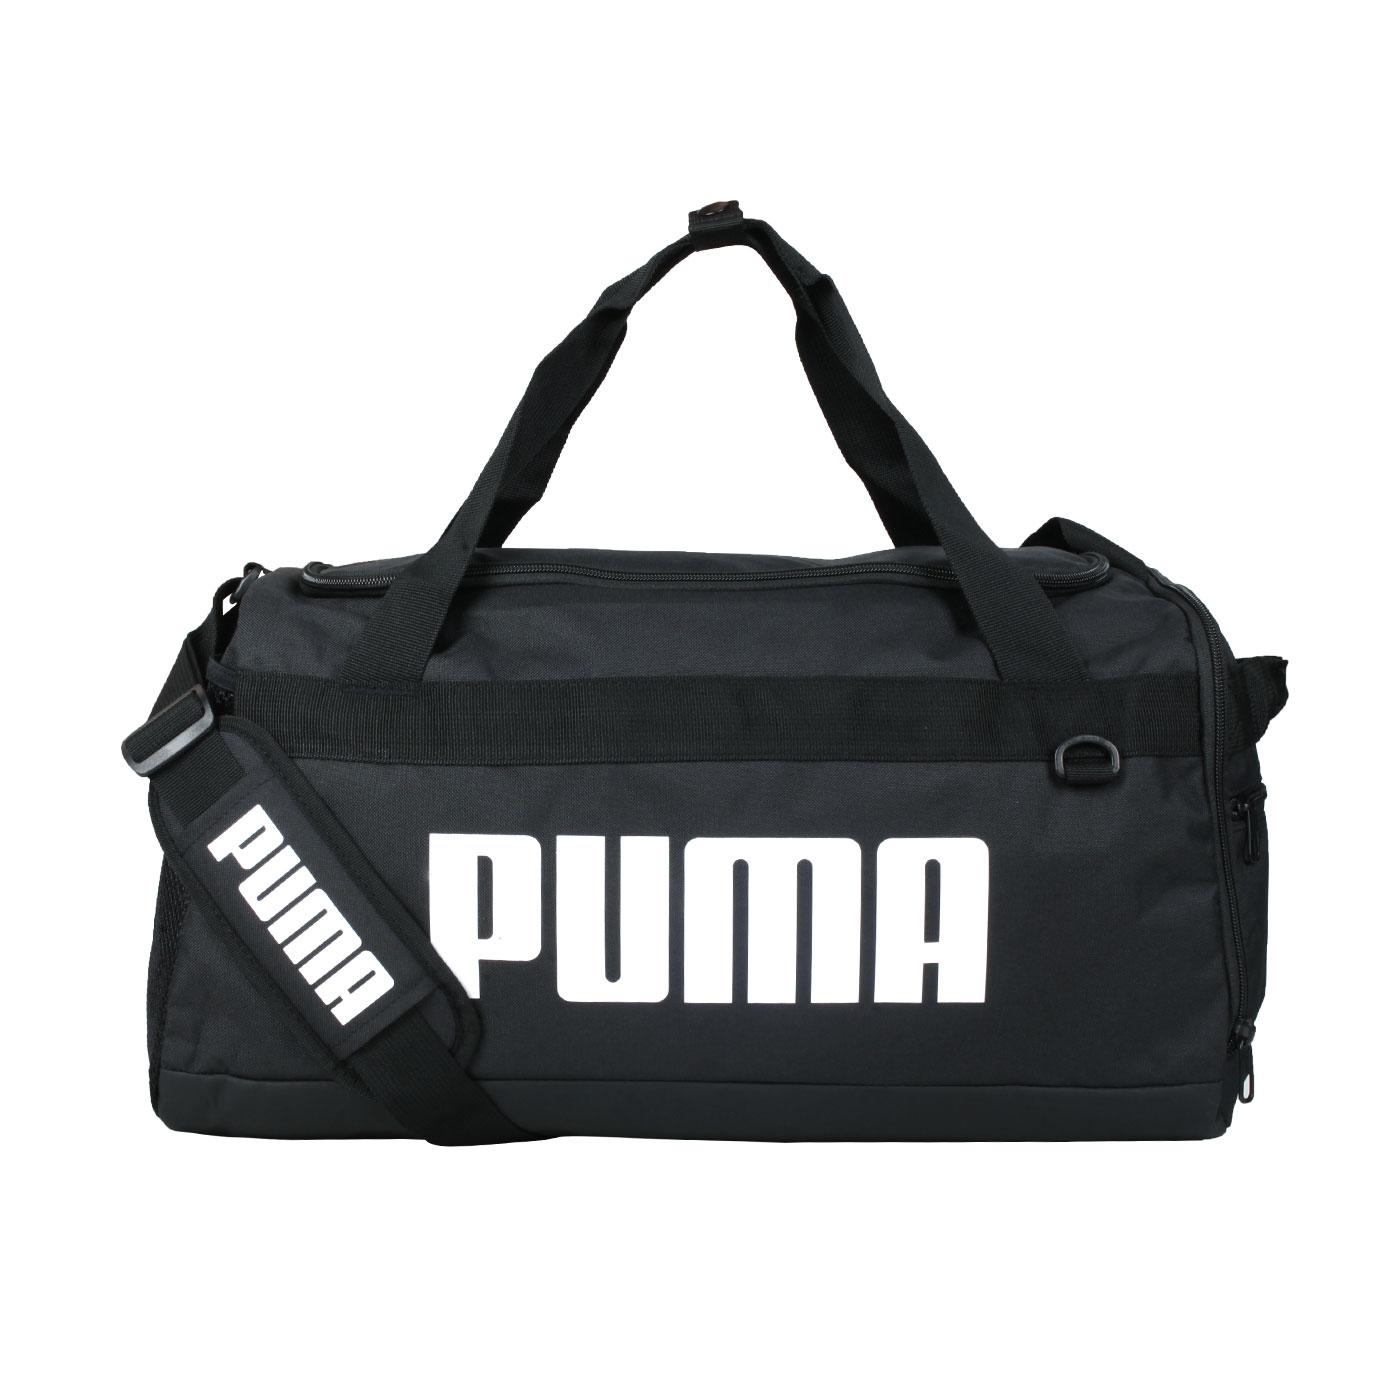 PUMA Challenger運動中袋 07662001 - 黑白